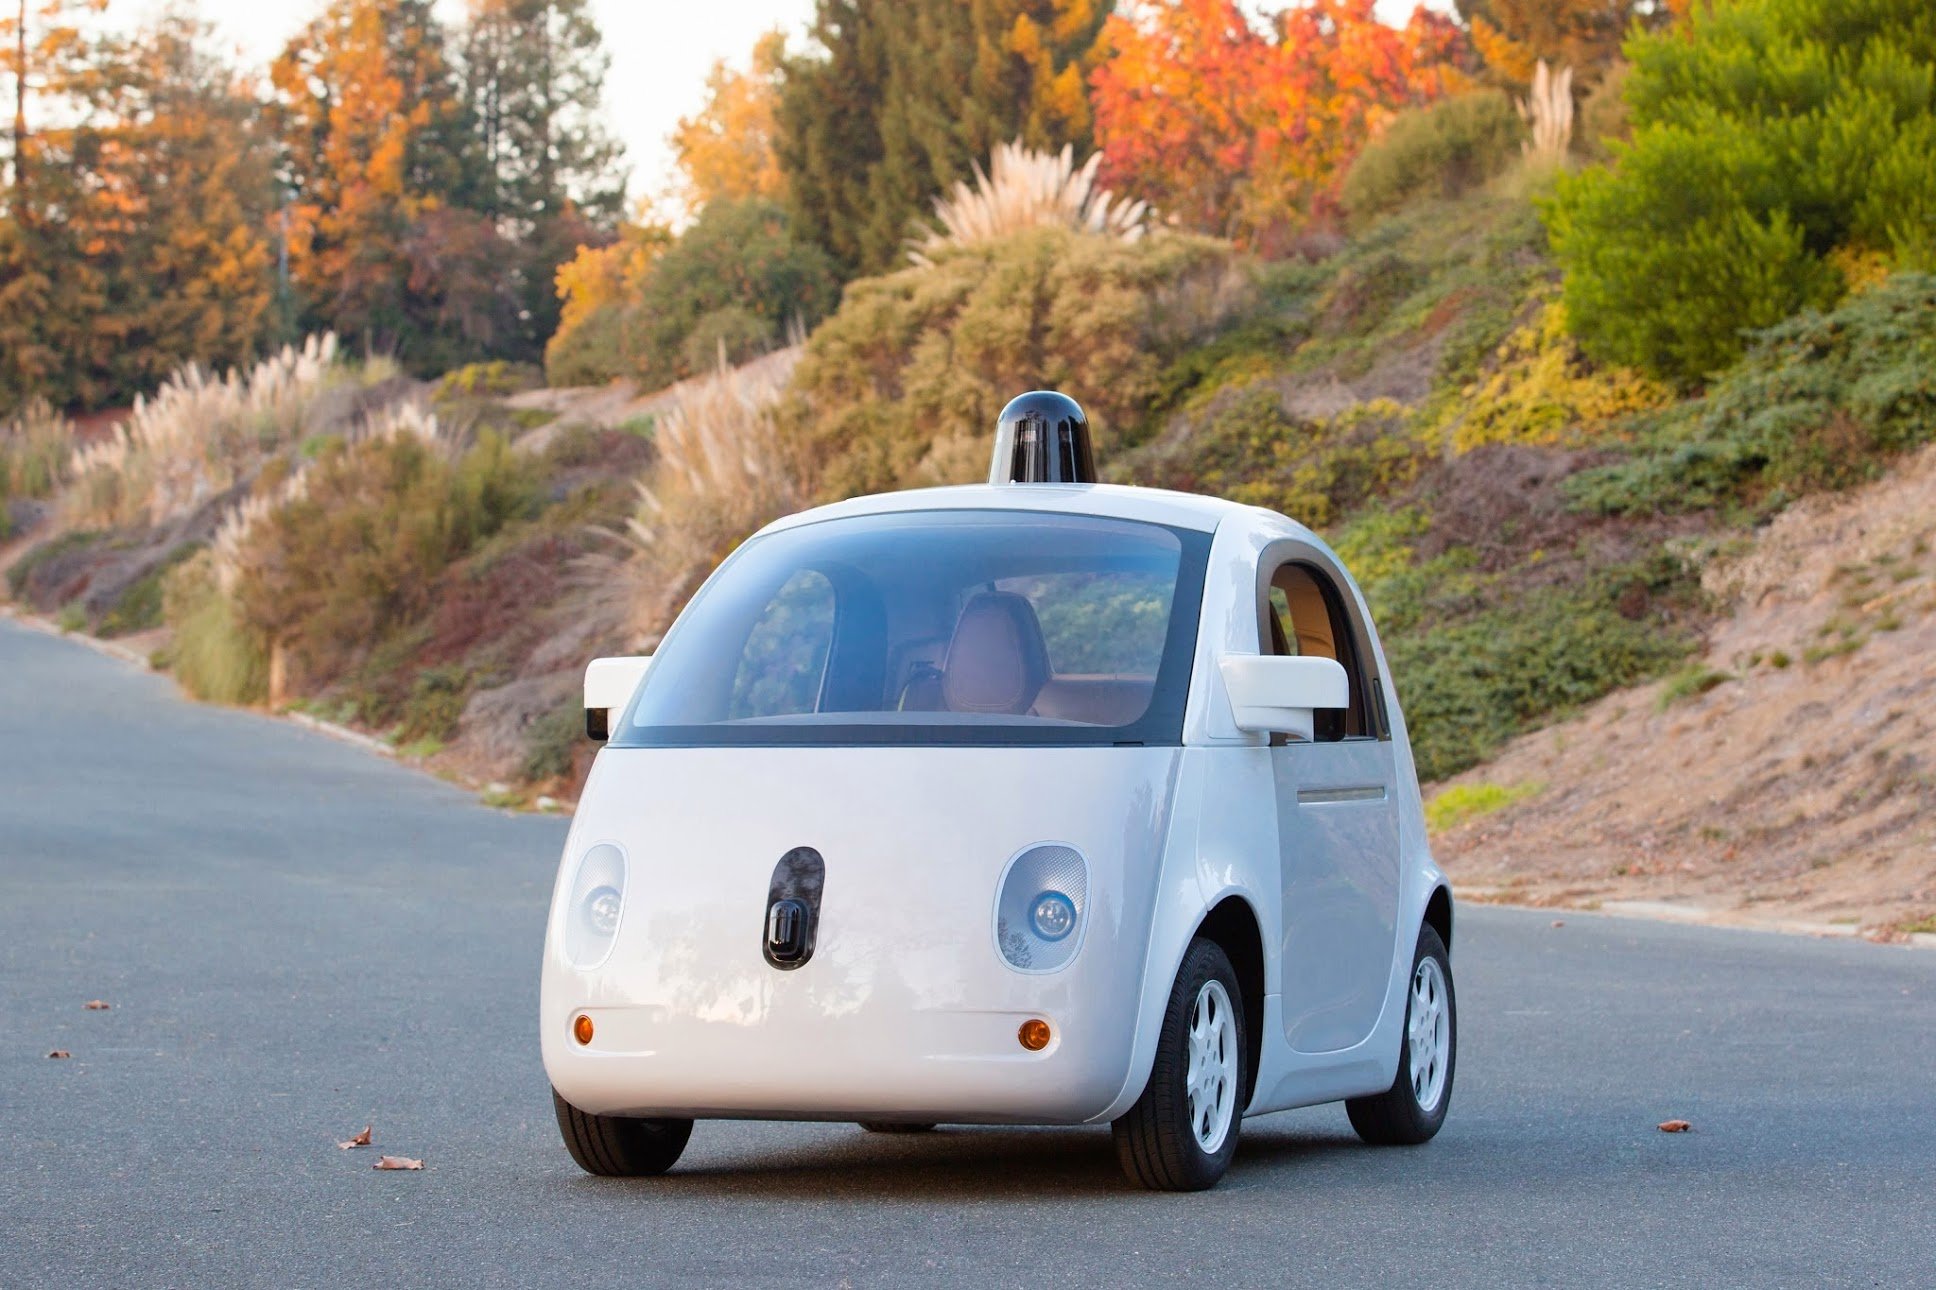 Google Vehicle prototype